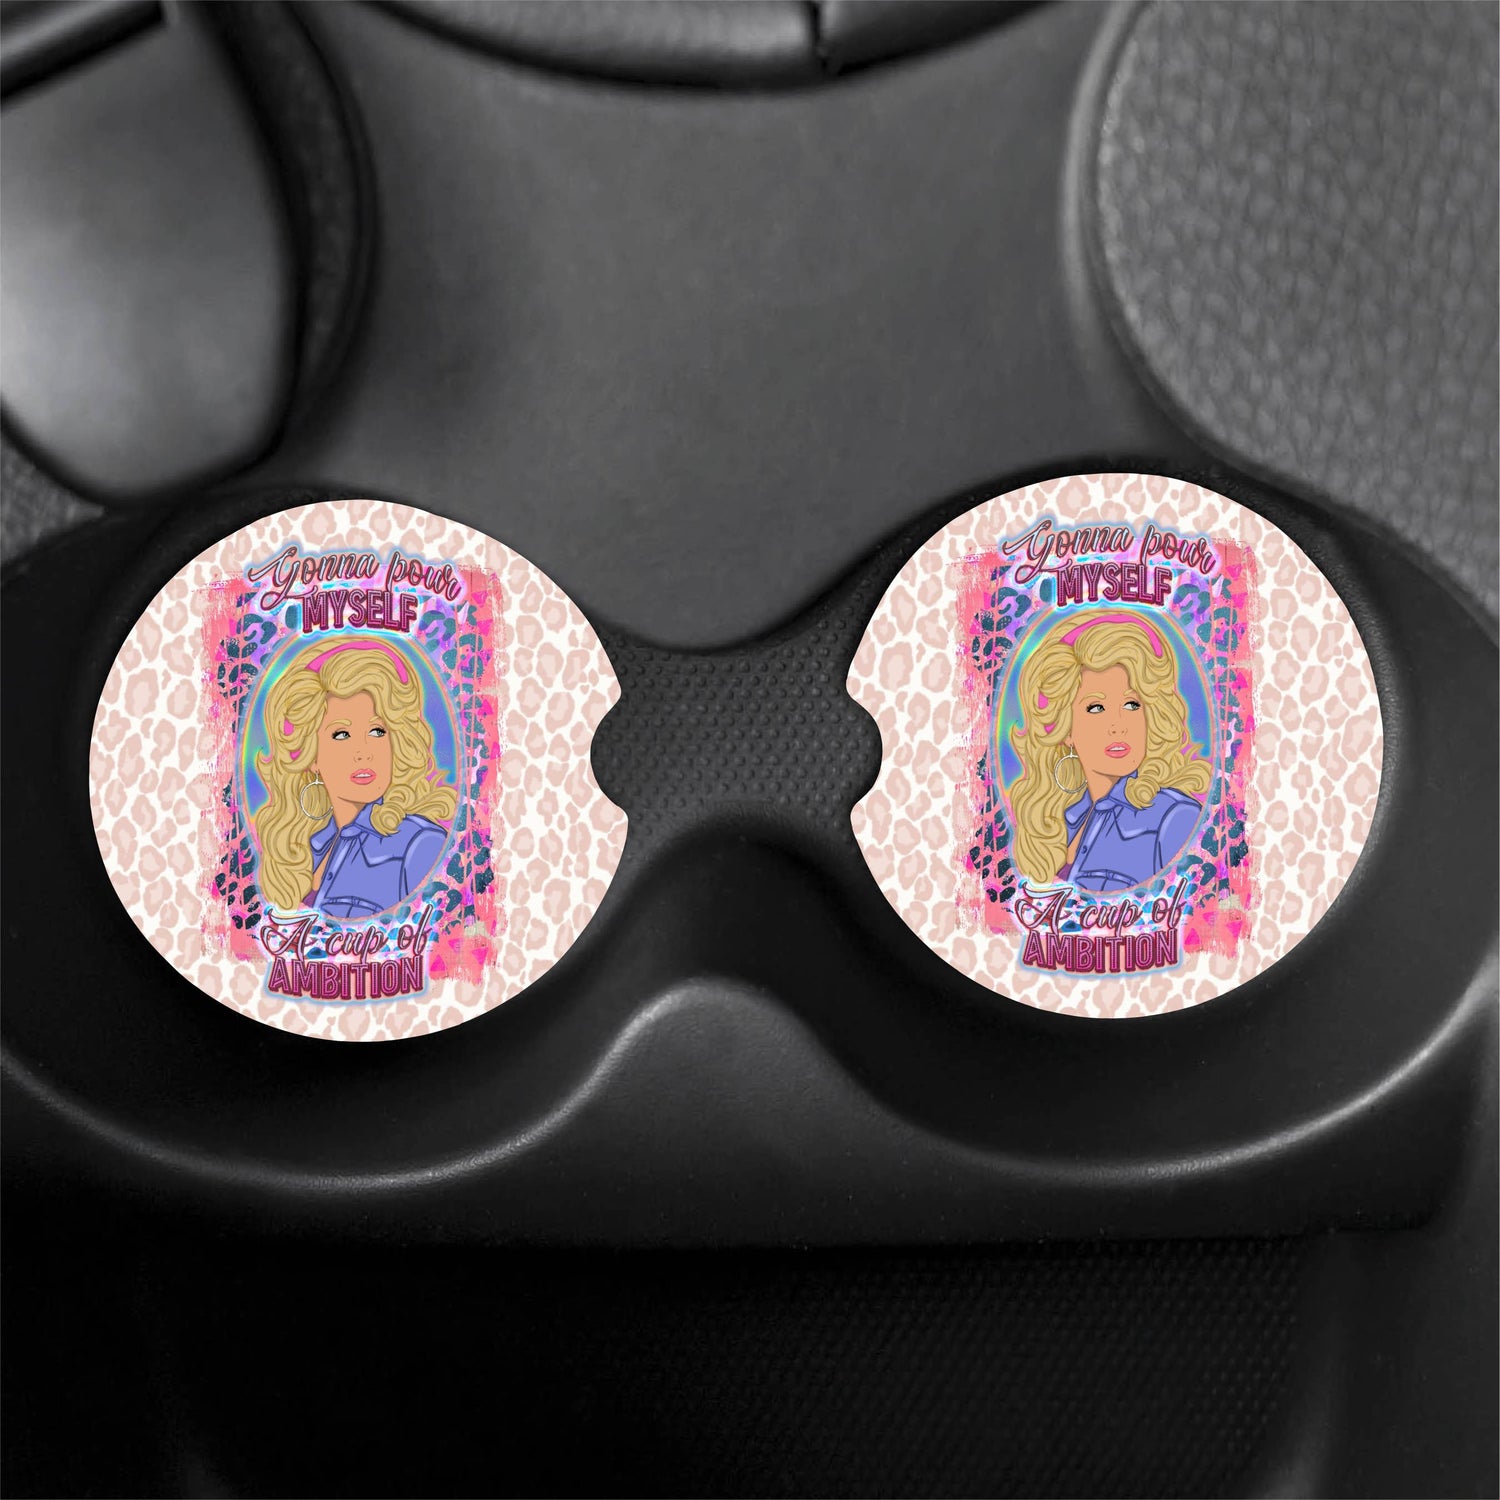 Dolly Parton Cup of Ambition Car Coasters